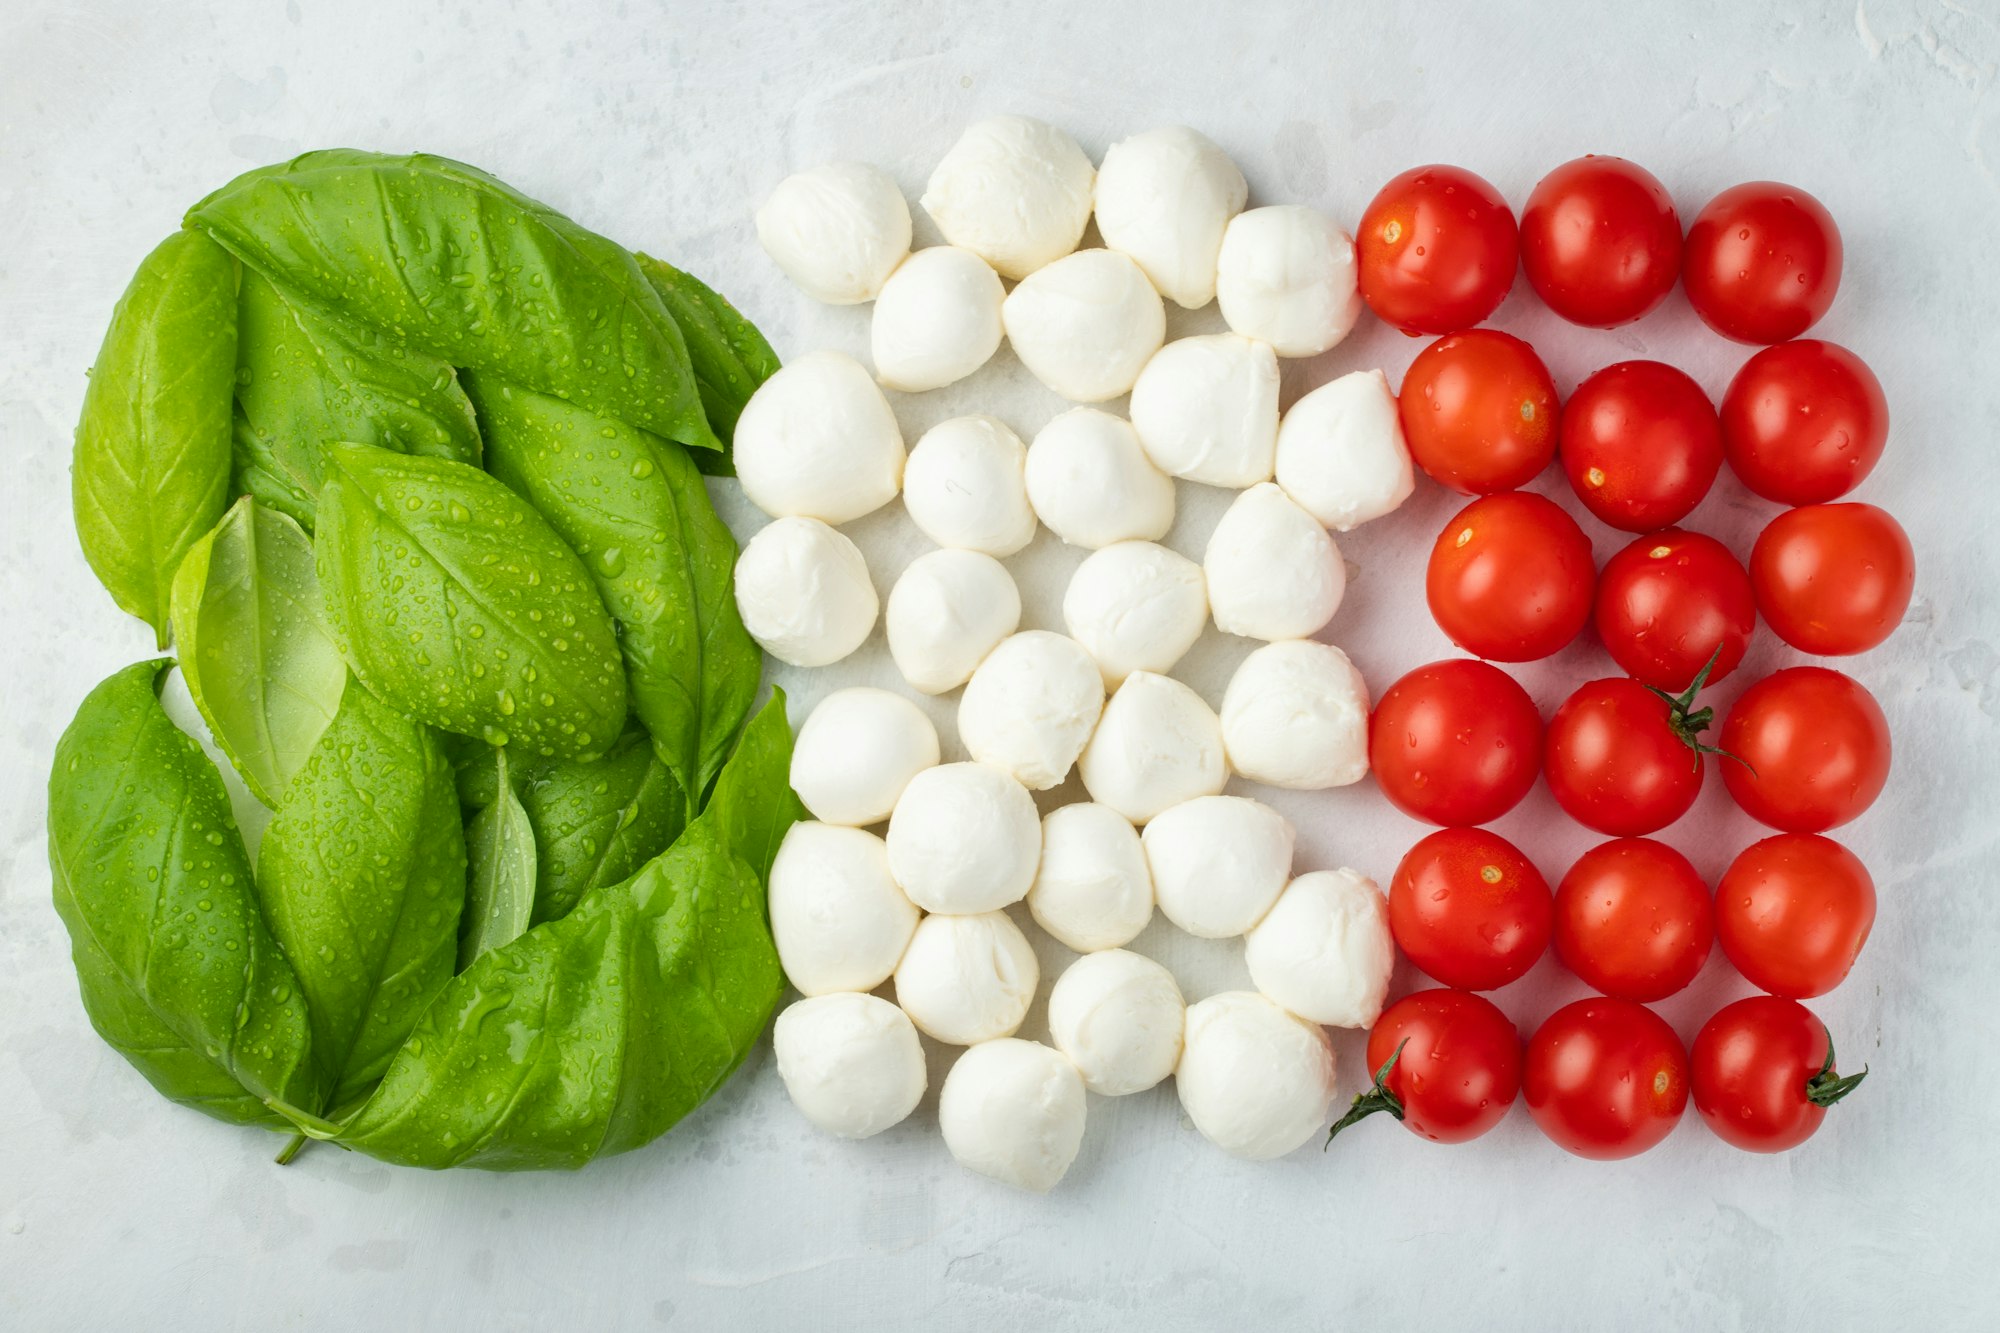 Italian flag made with Tomato Mozzarella and Basil. The concept of Italian cuisine